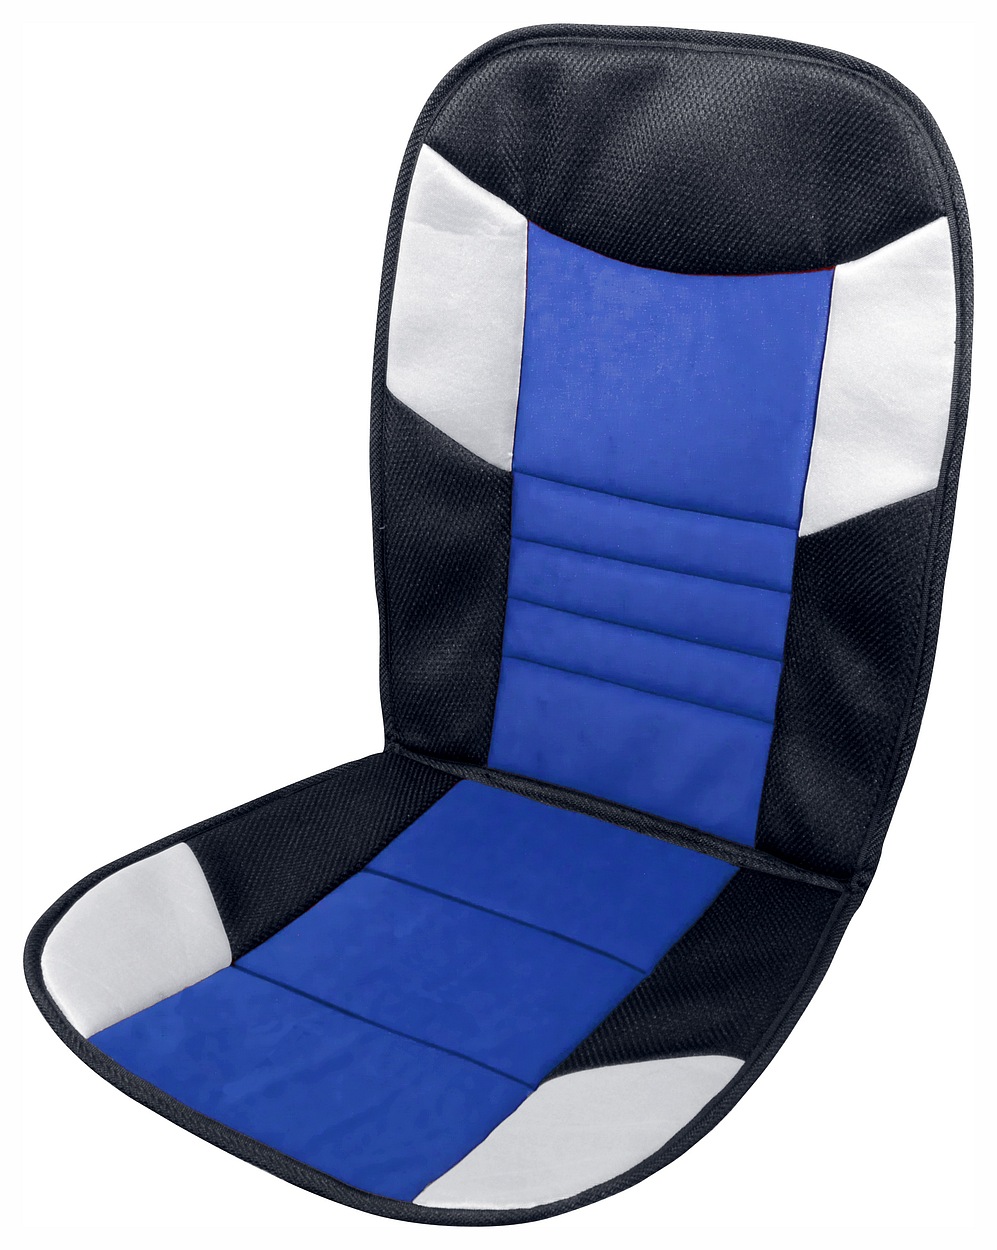 Potah sedadla TETRIS černo-modrý